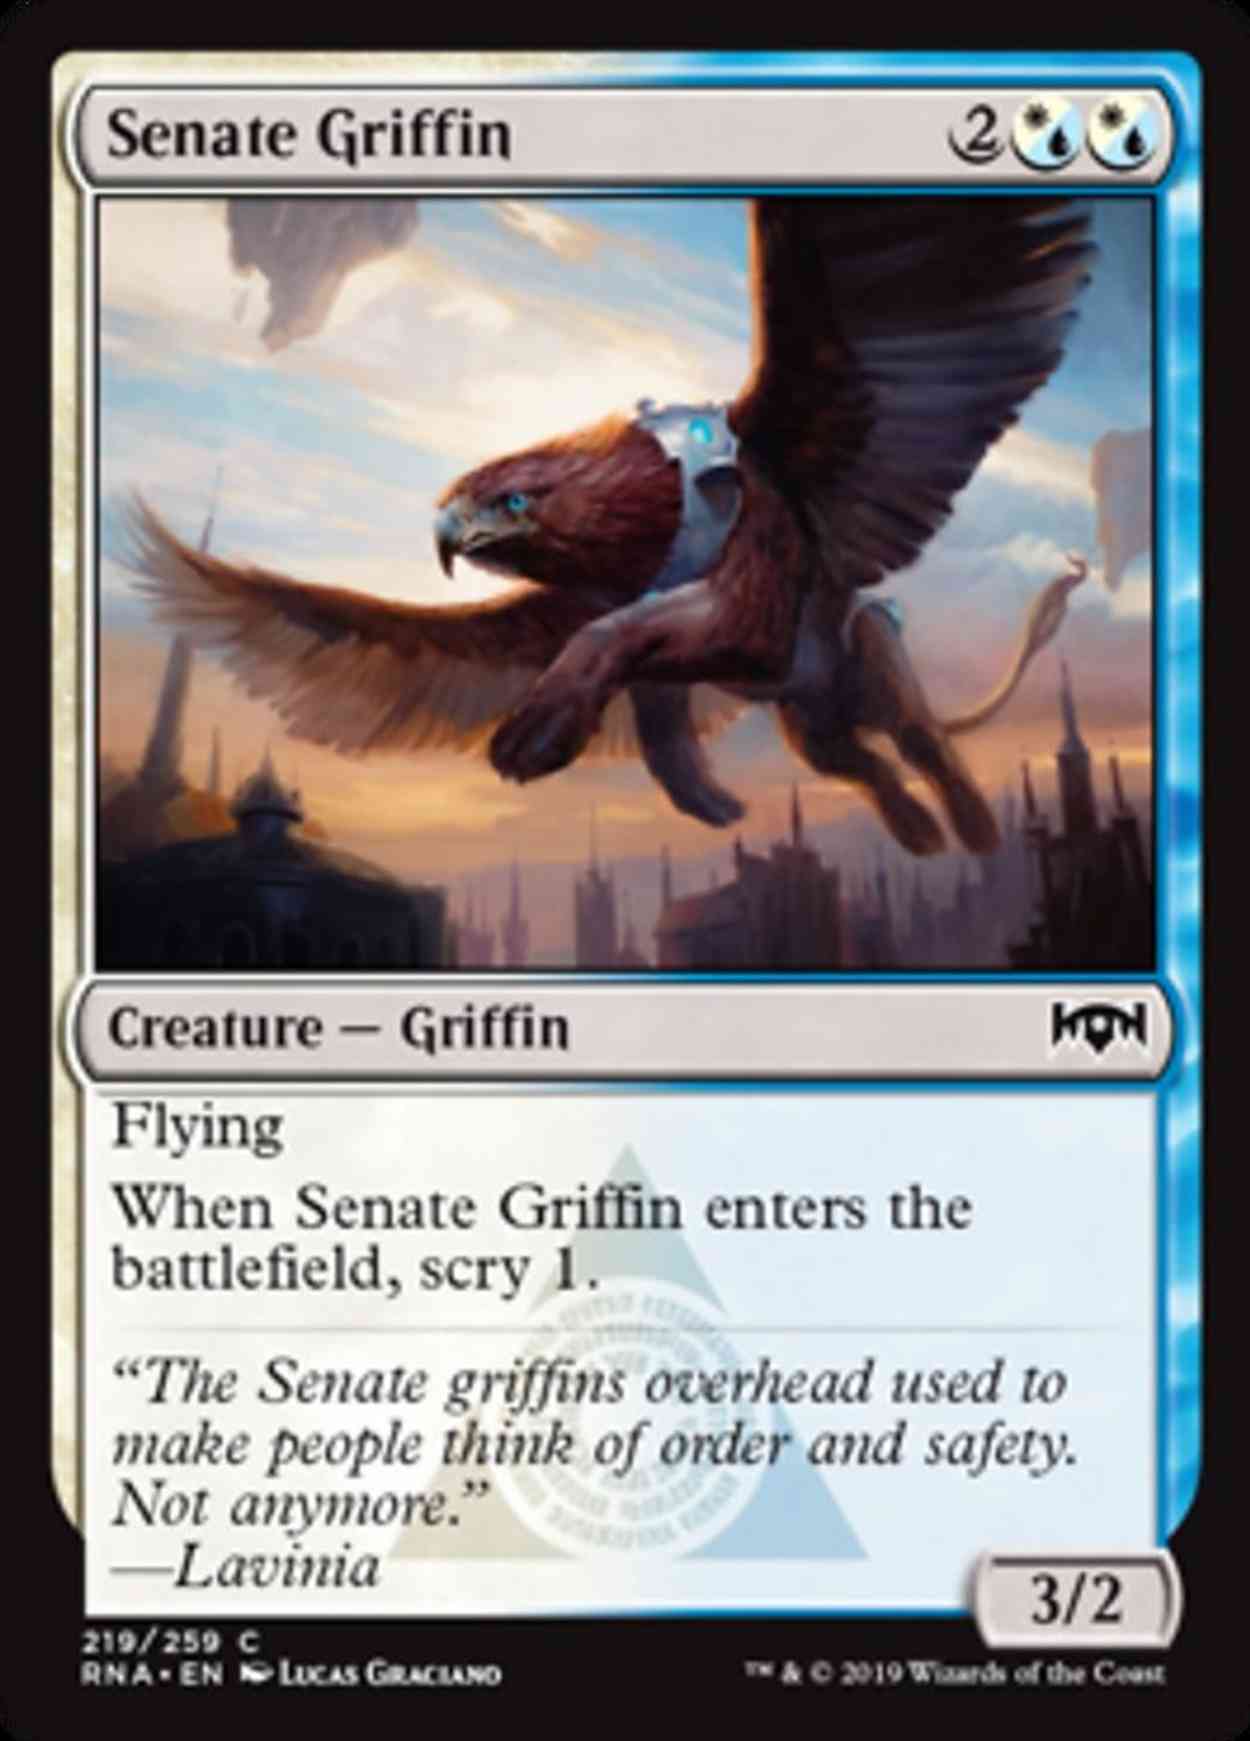 Senate Griffin magic card front